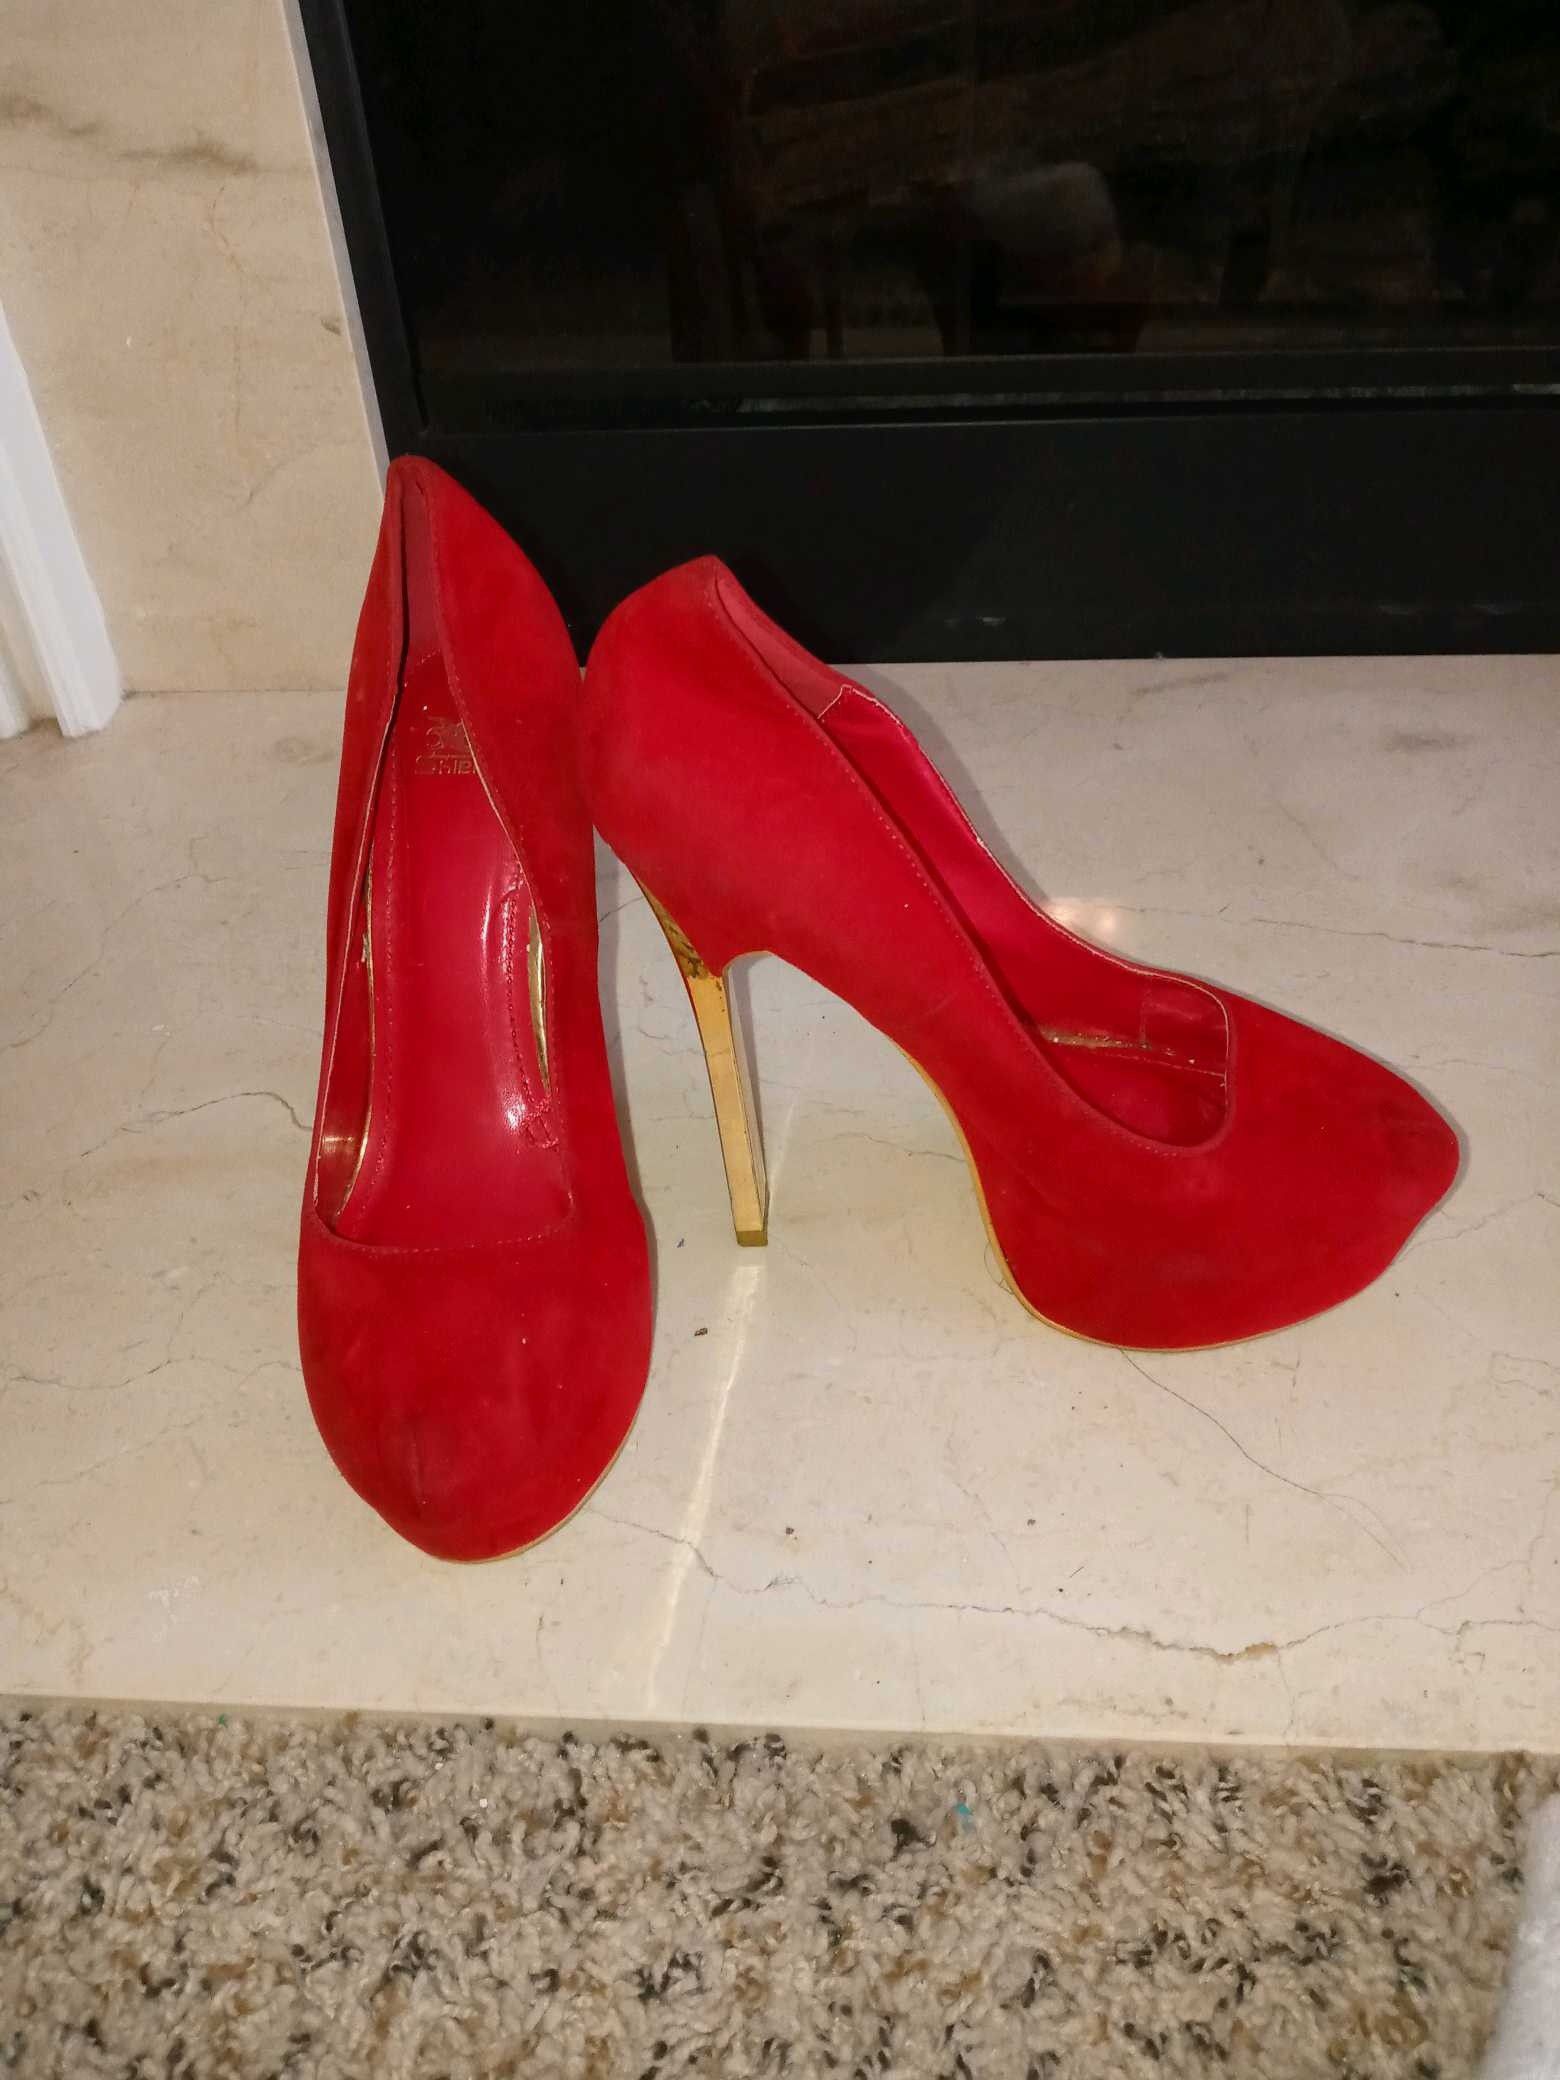 Red suede pumps w/gold heel